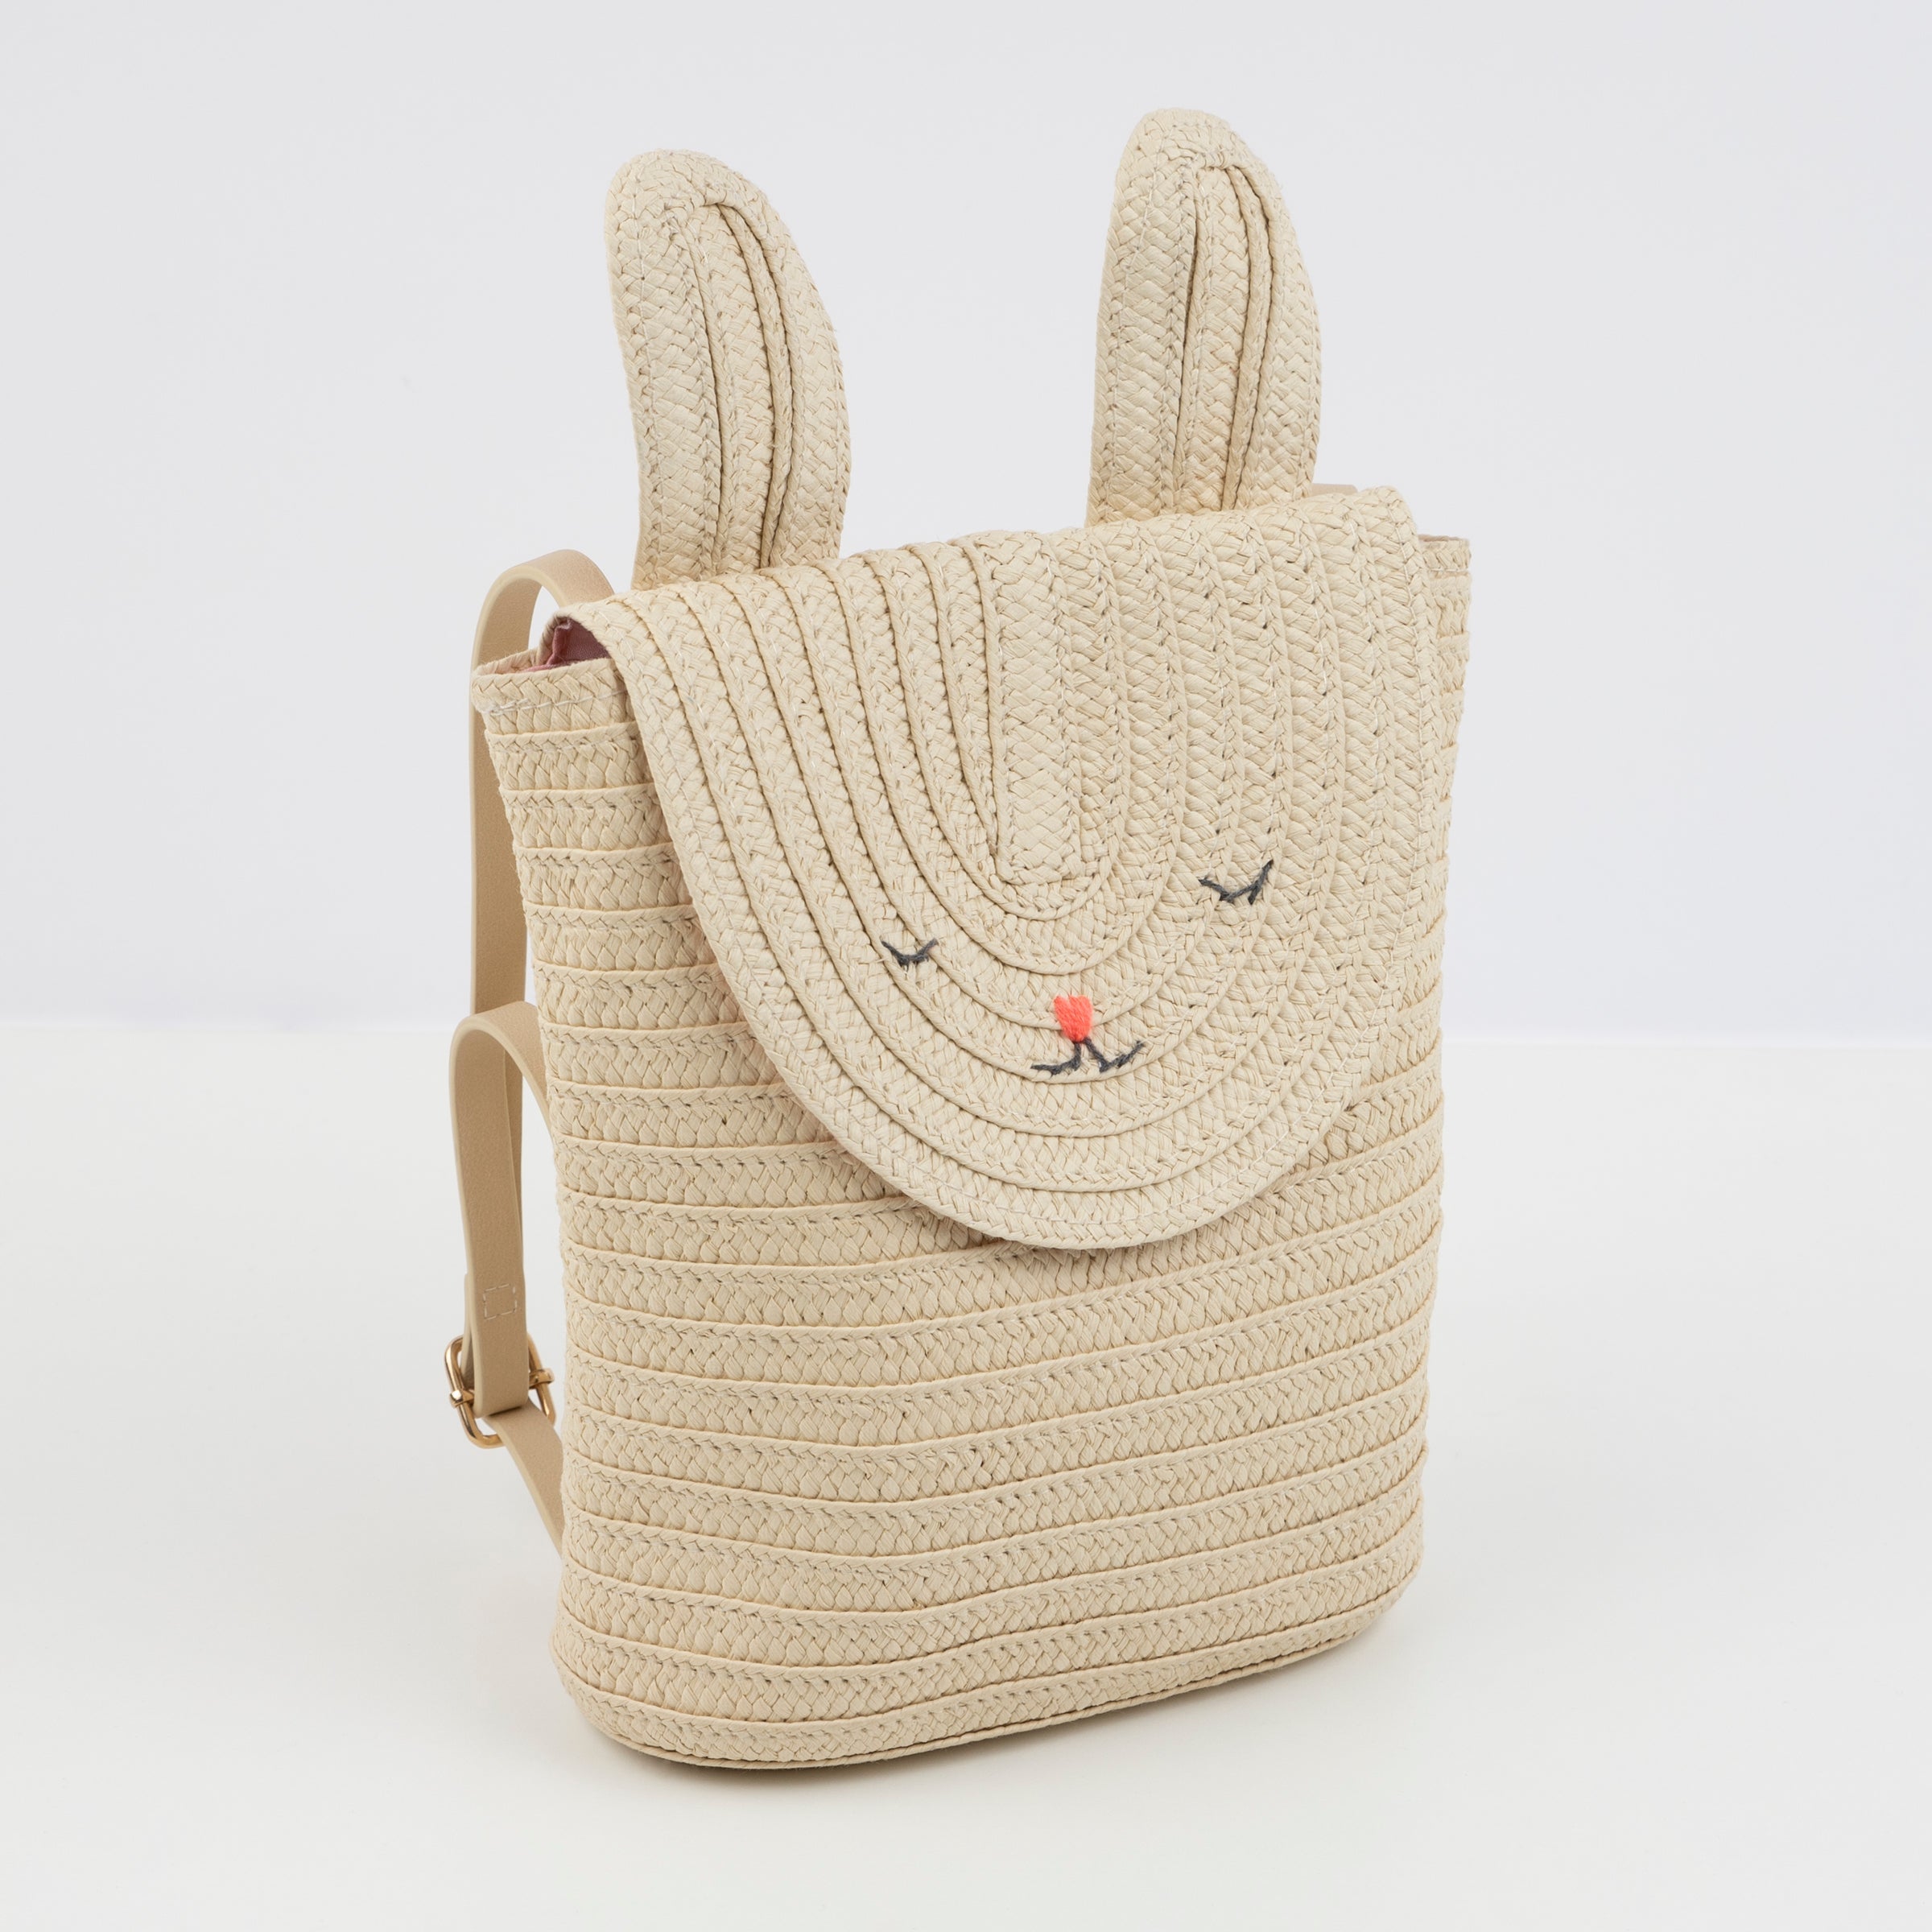 Meri Meri - Woven Straw Bunny Bag